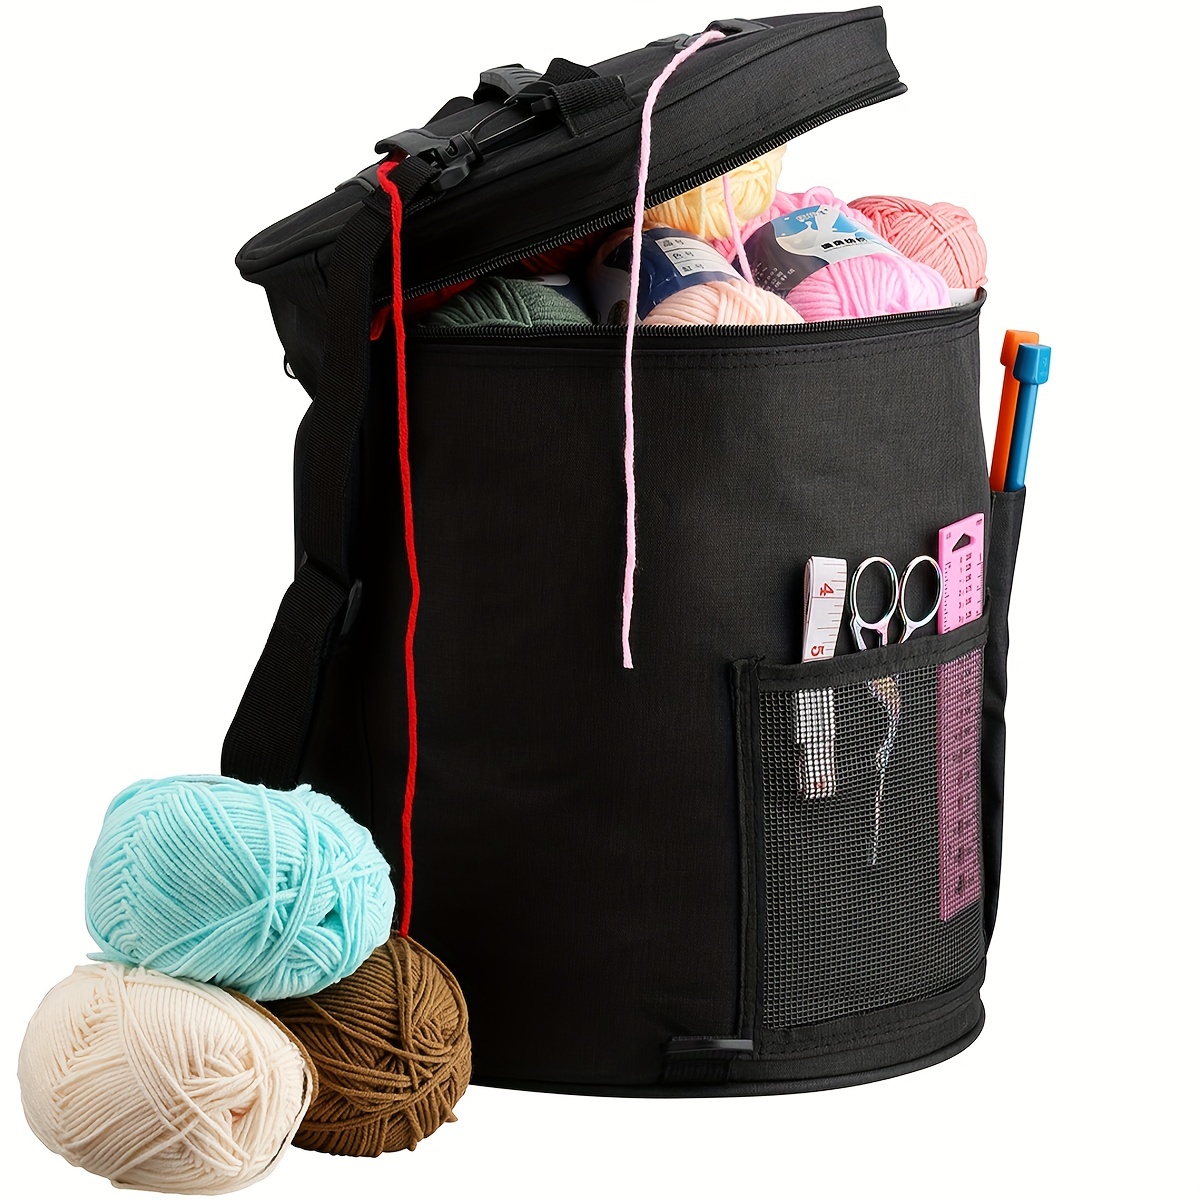 Knitting Bag Backpack Skeins for Crochet Hook Large Capacity